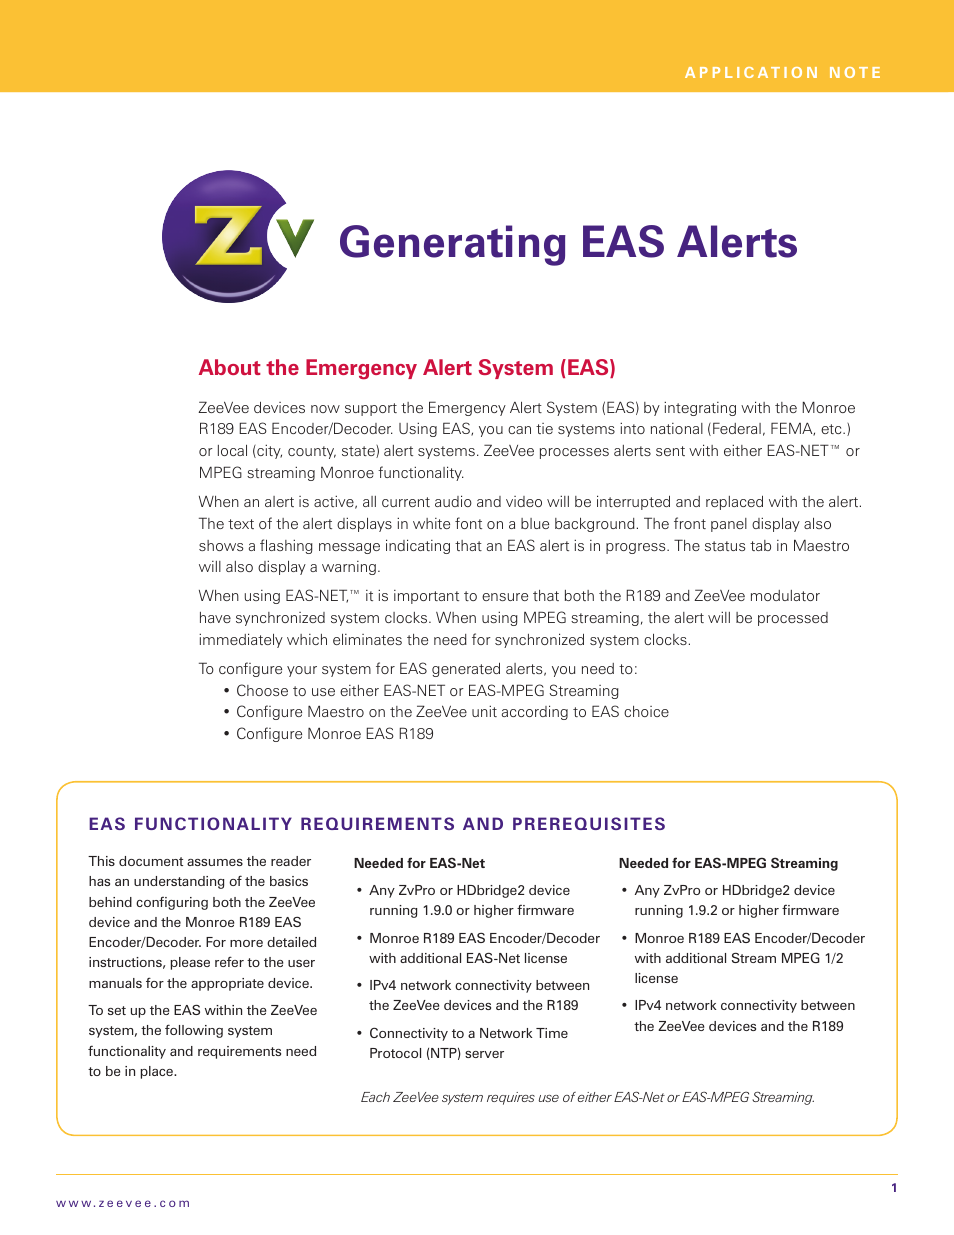 EAS - Emergency Alert System (QAM & DVB-T/C)